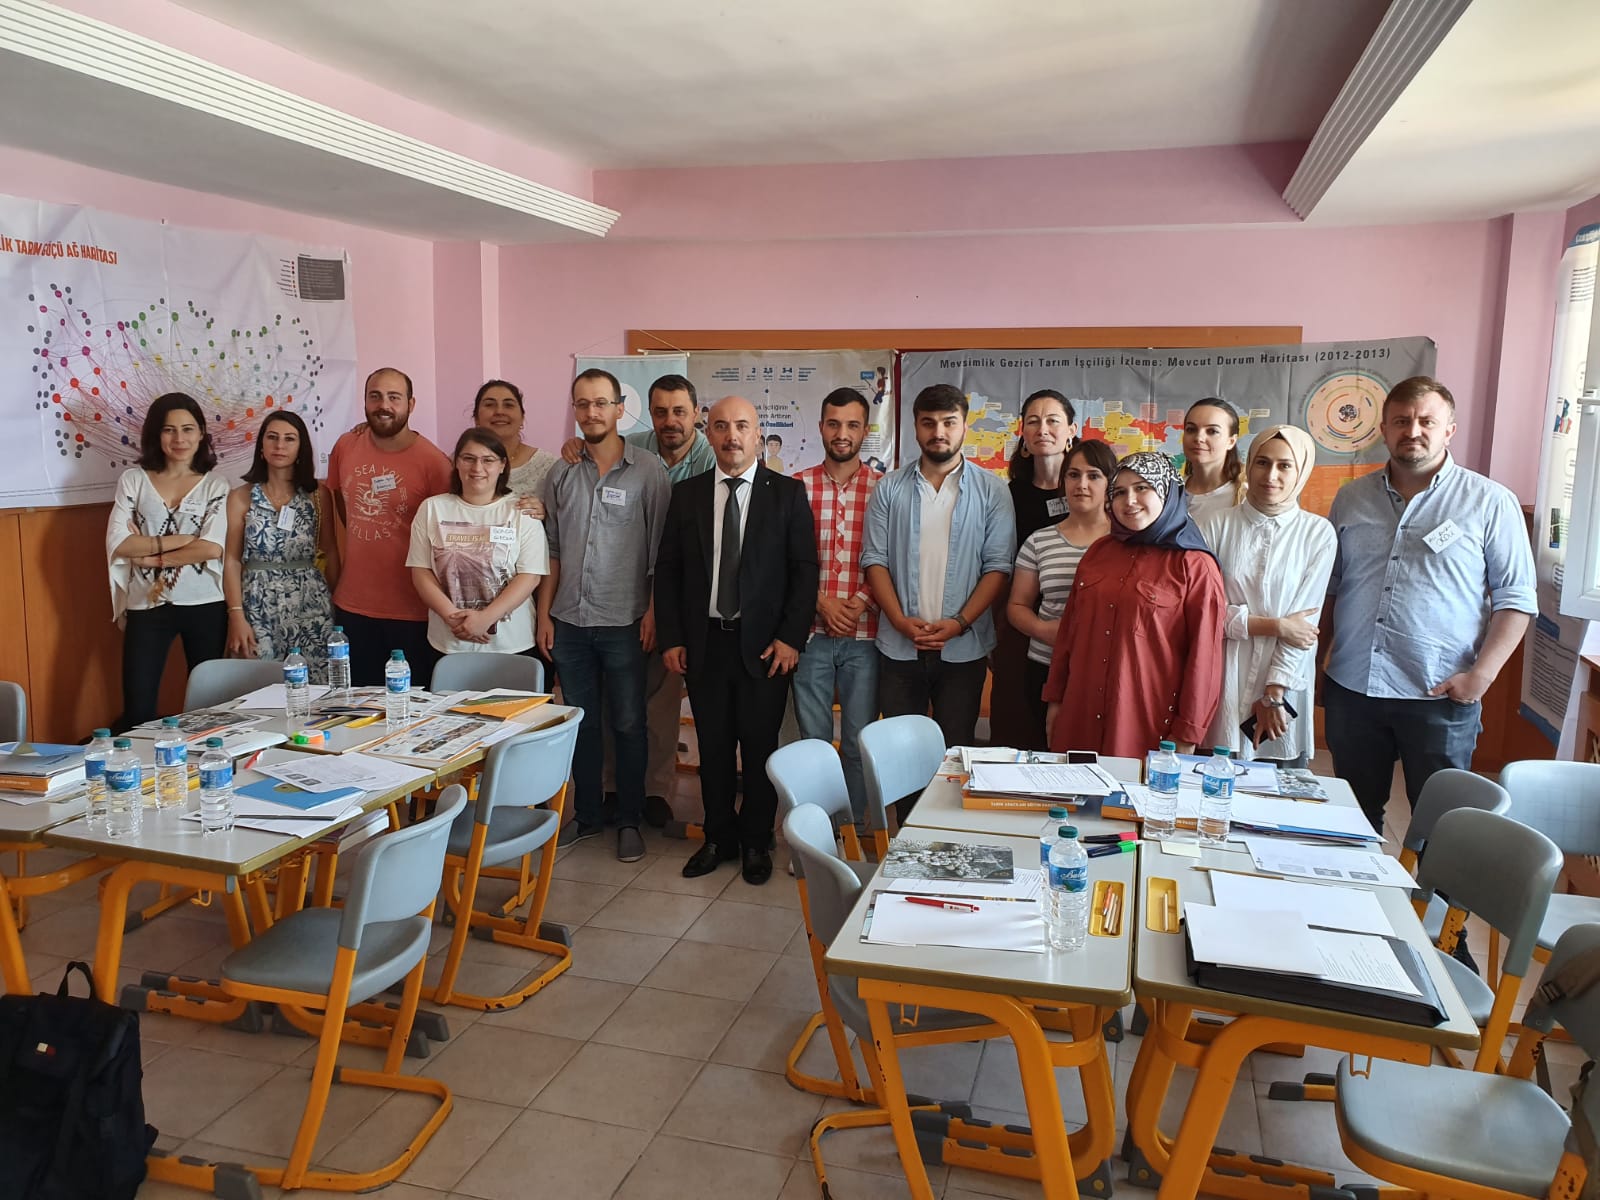 We received the Trainer's Training by UNICEF Turkey - Development Workshop!